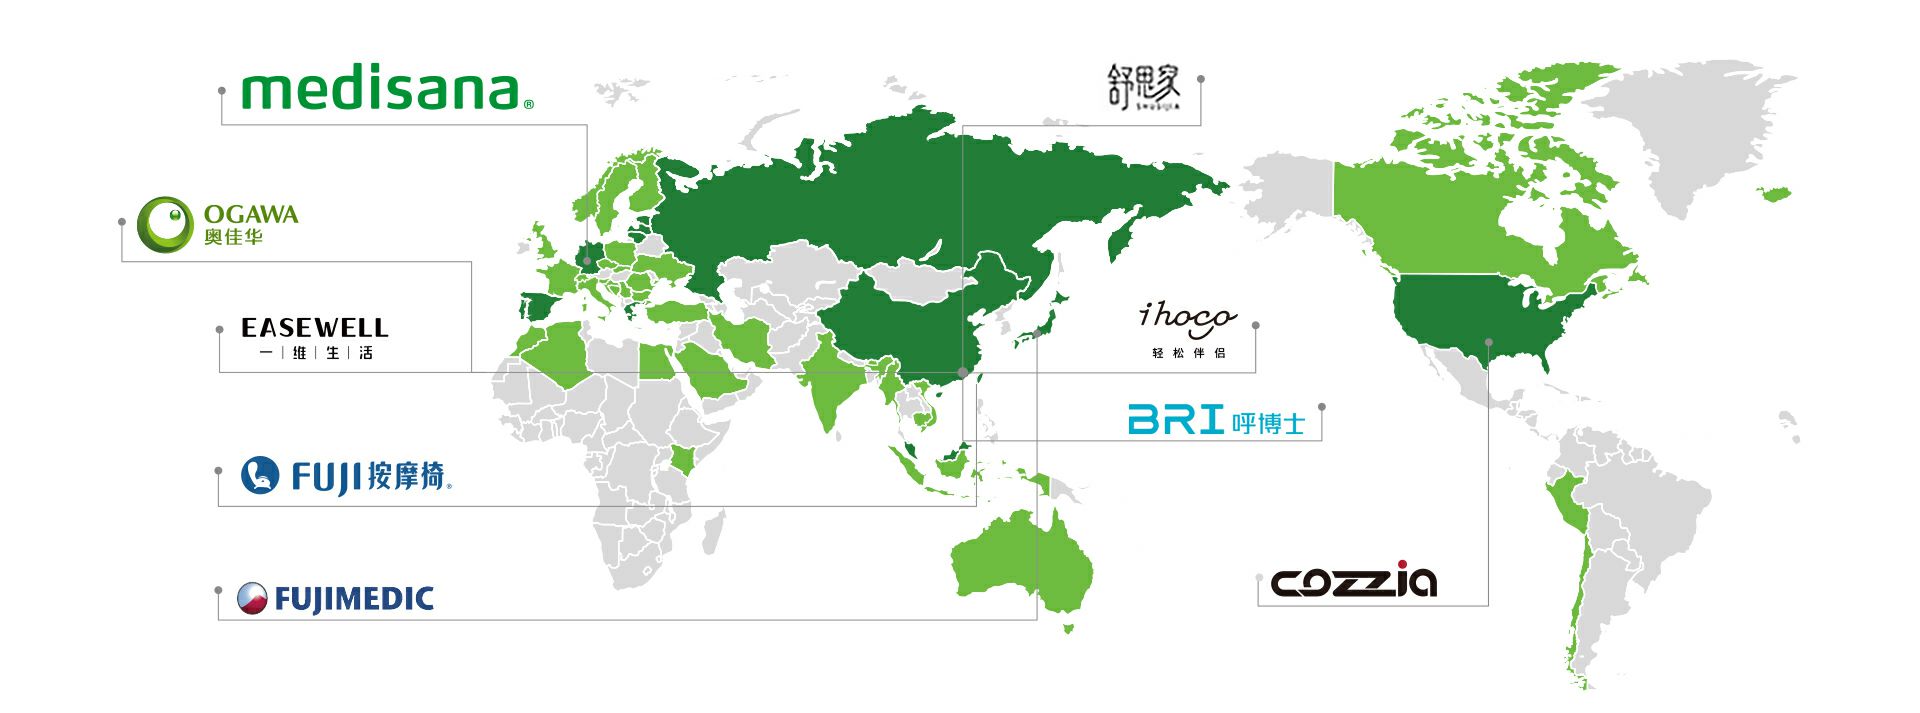 <b>YABO.COM(中国)管理有限公司</b>集团及旗下品牌介绍